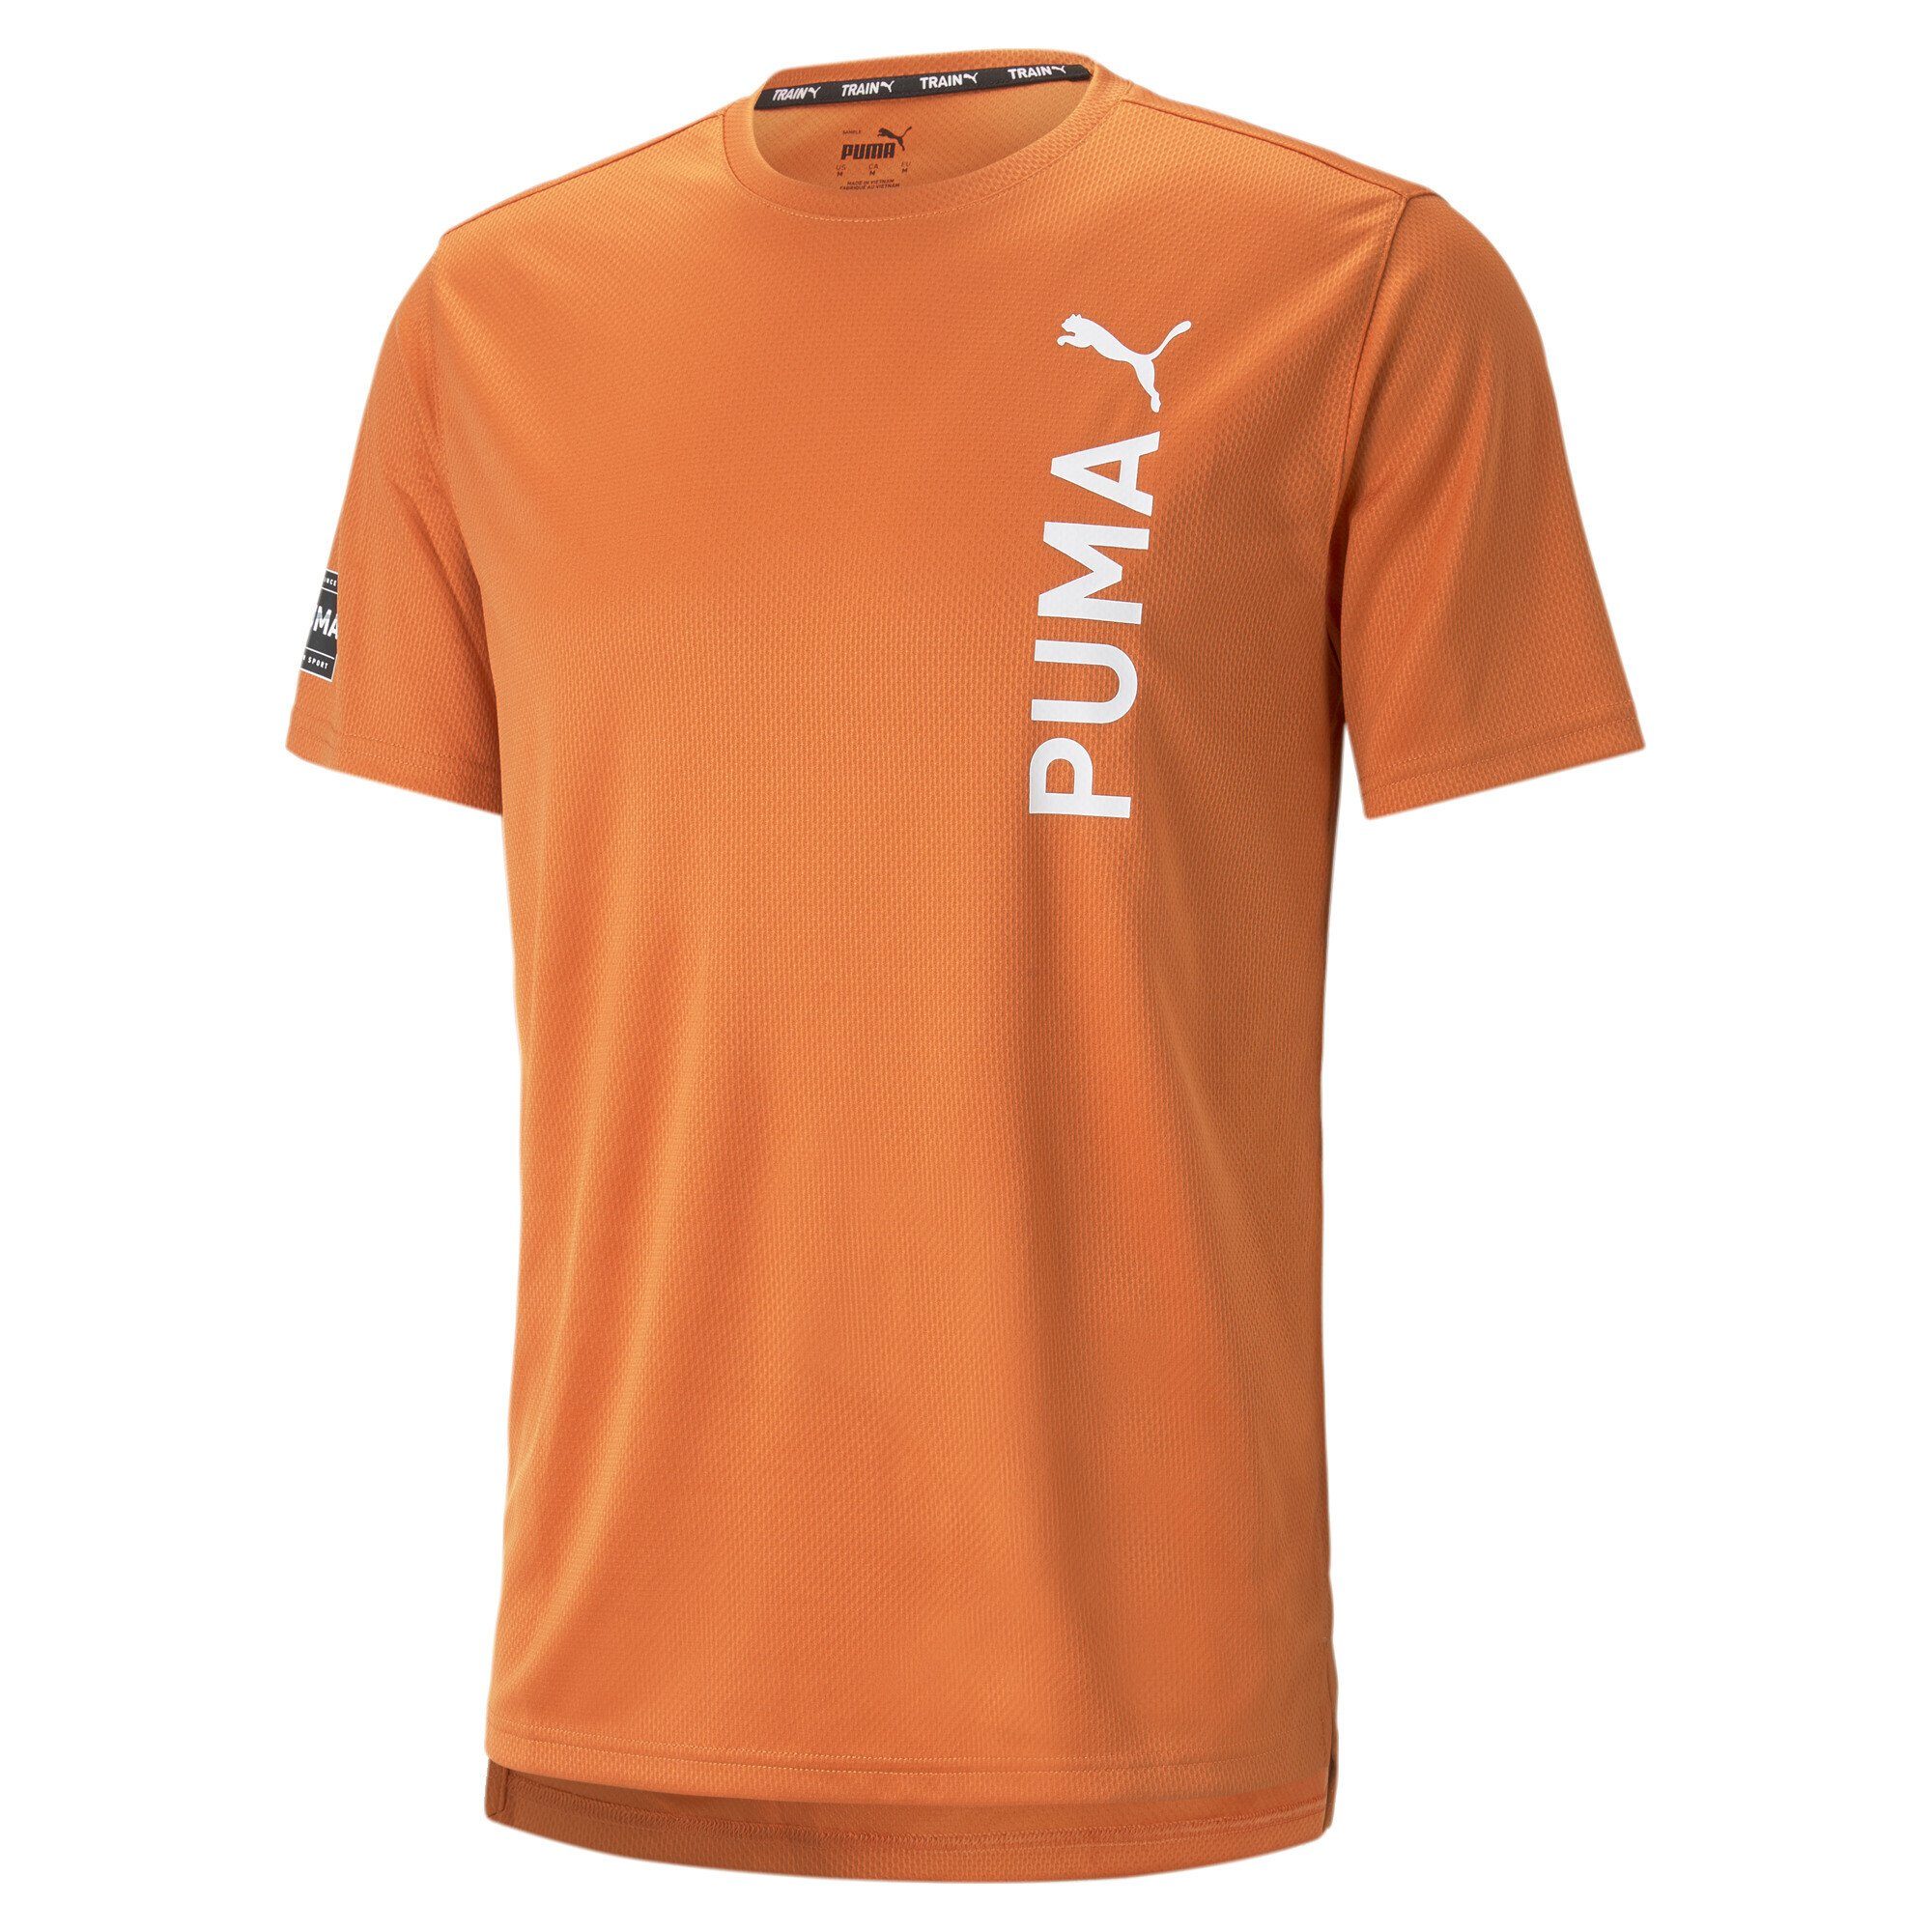 PUMA Trainingsshirt PUMA Fit Ultrabreathe Trainings-T-Shirt Herren Chili Powder Orange